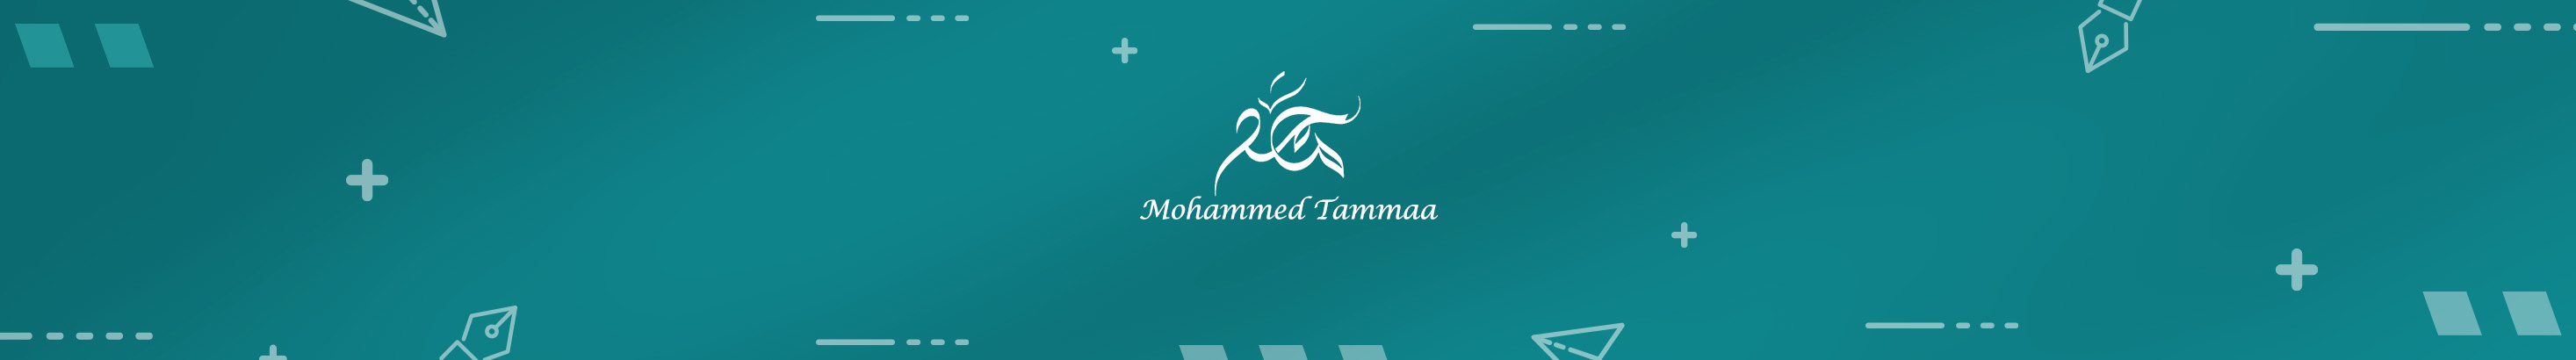 Mohammed Tammaas profilbanner